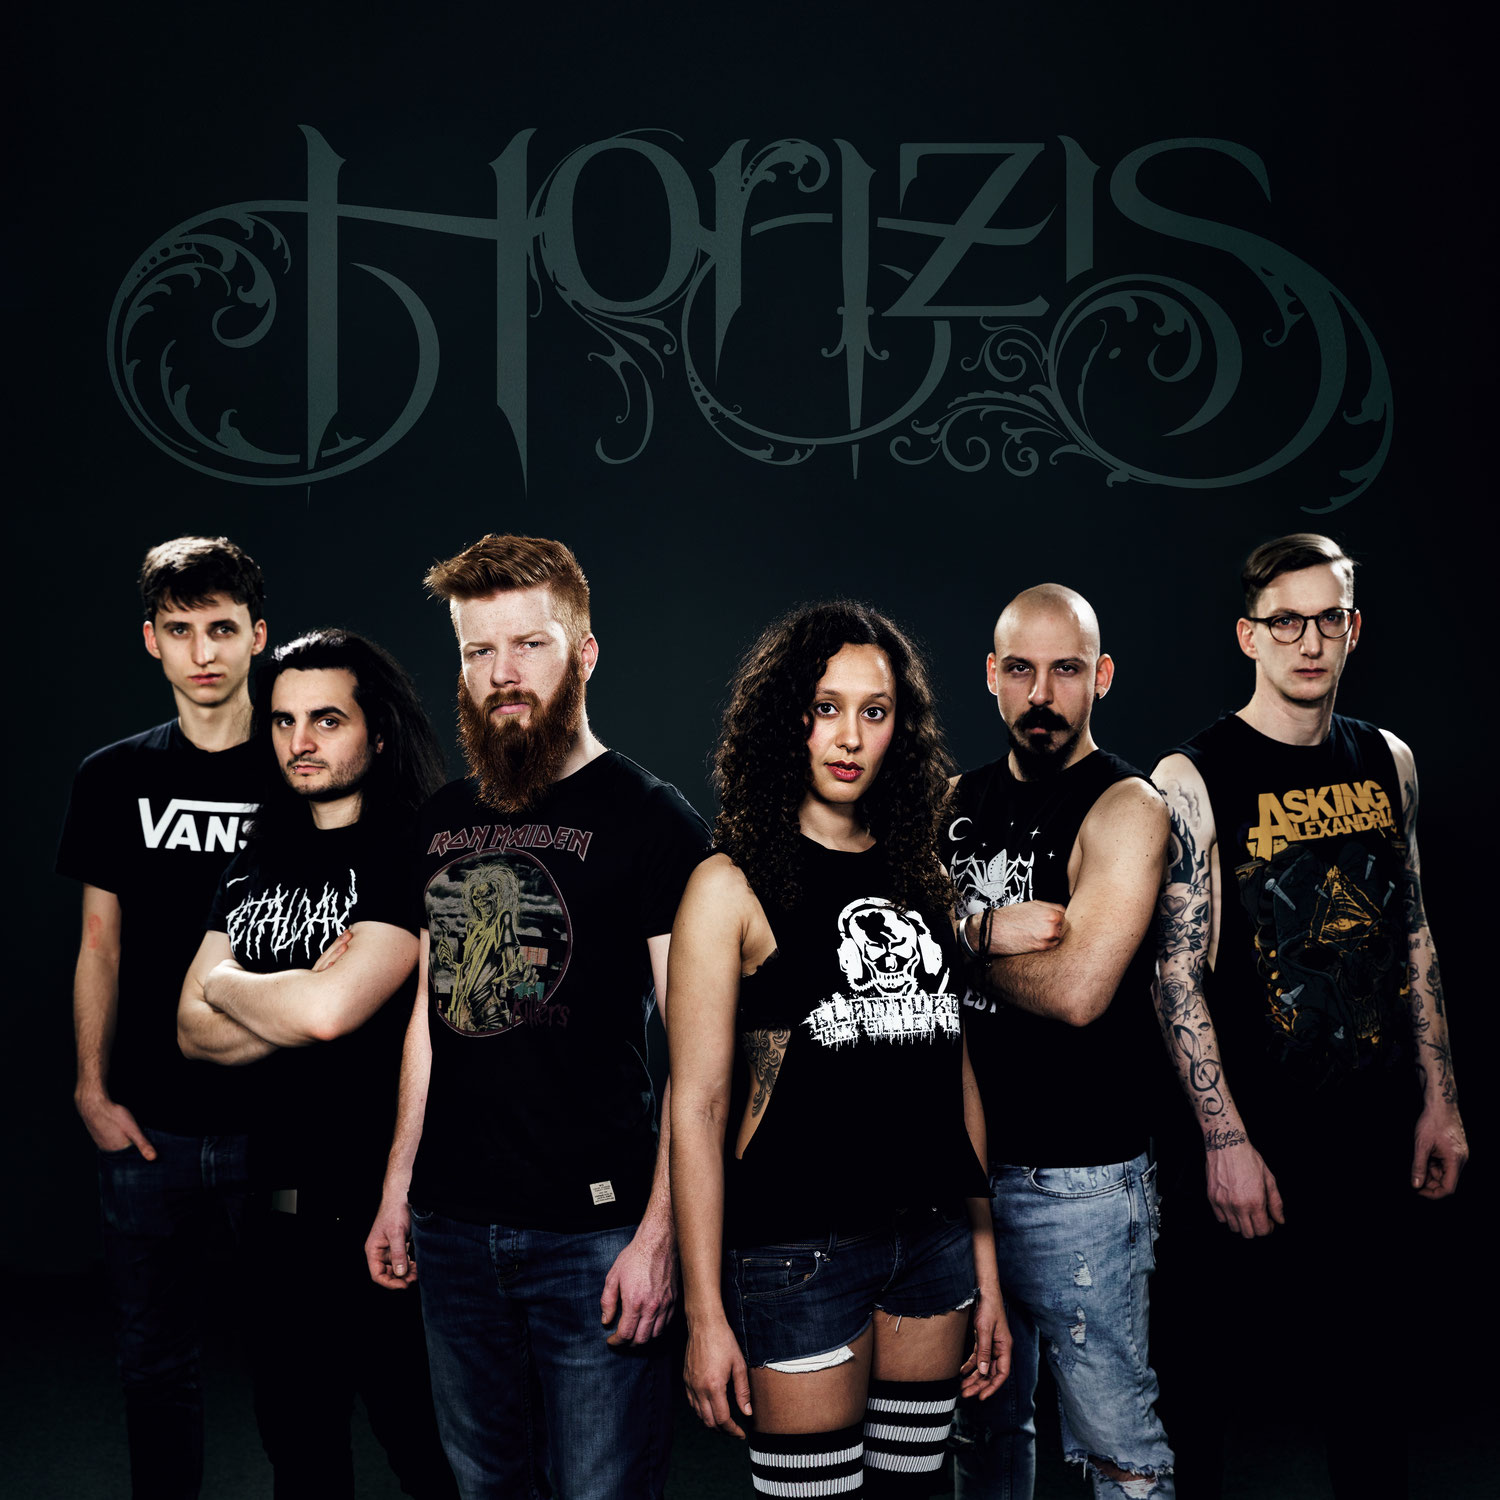 Horizis - Epic Metal from Aachen